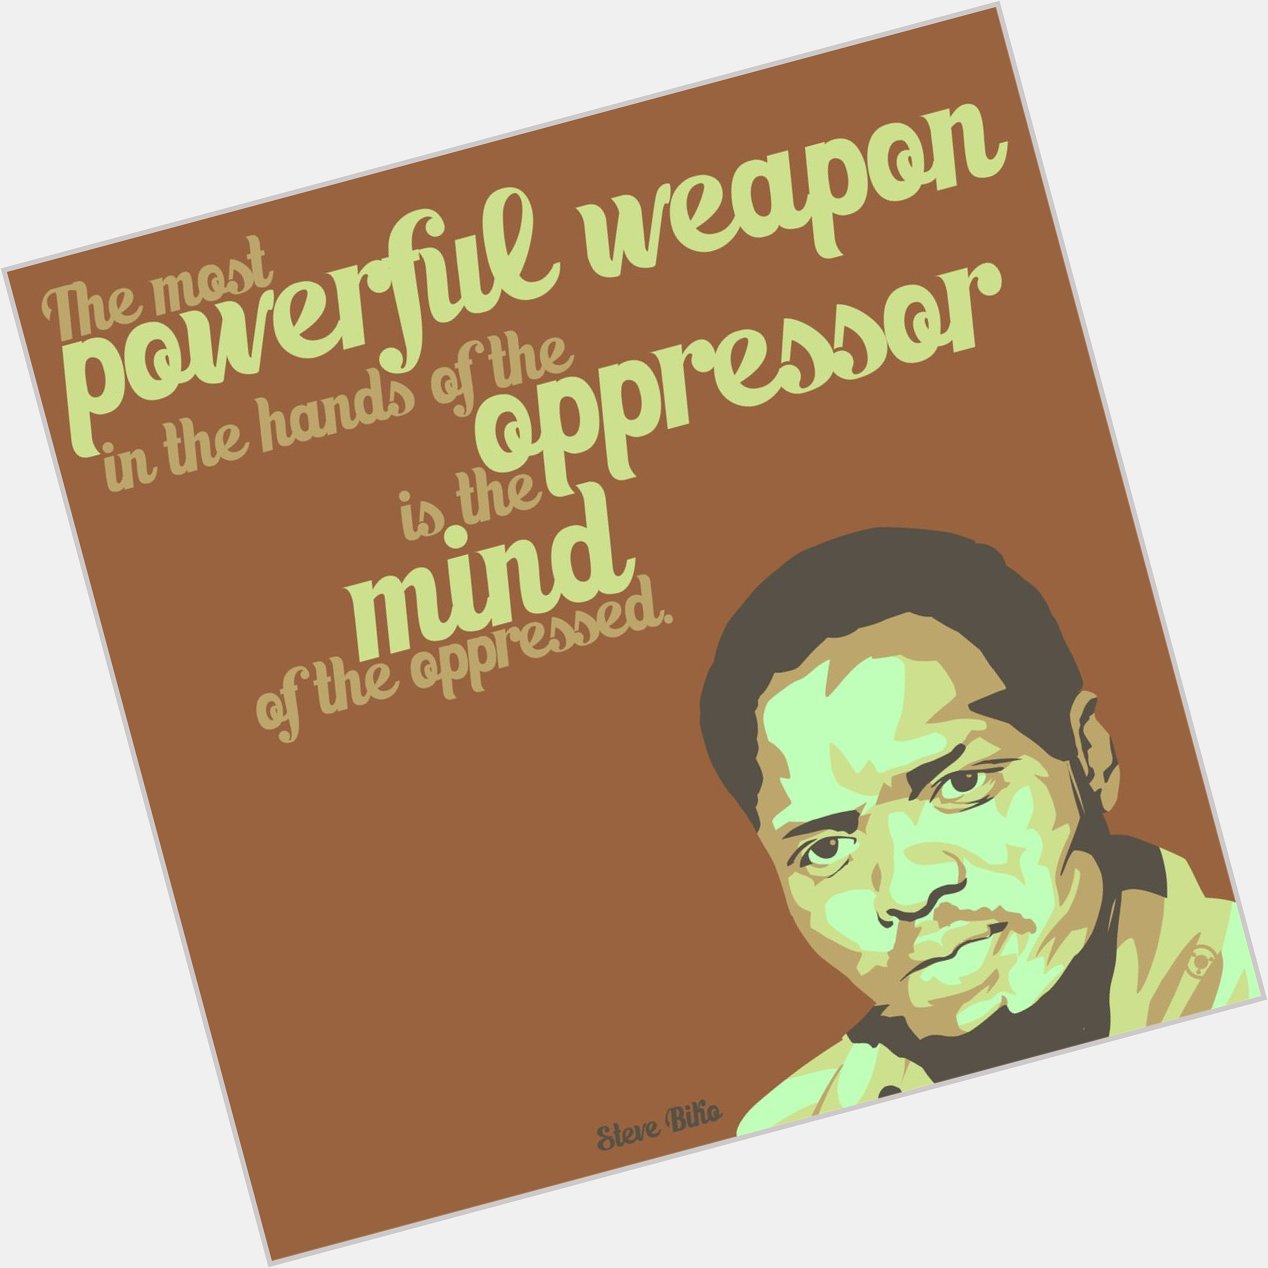  The most powerful weapon...\"-Steve Biko (Happy Birthday) [1667x1667] OC via /r/QuotesPorn  